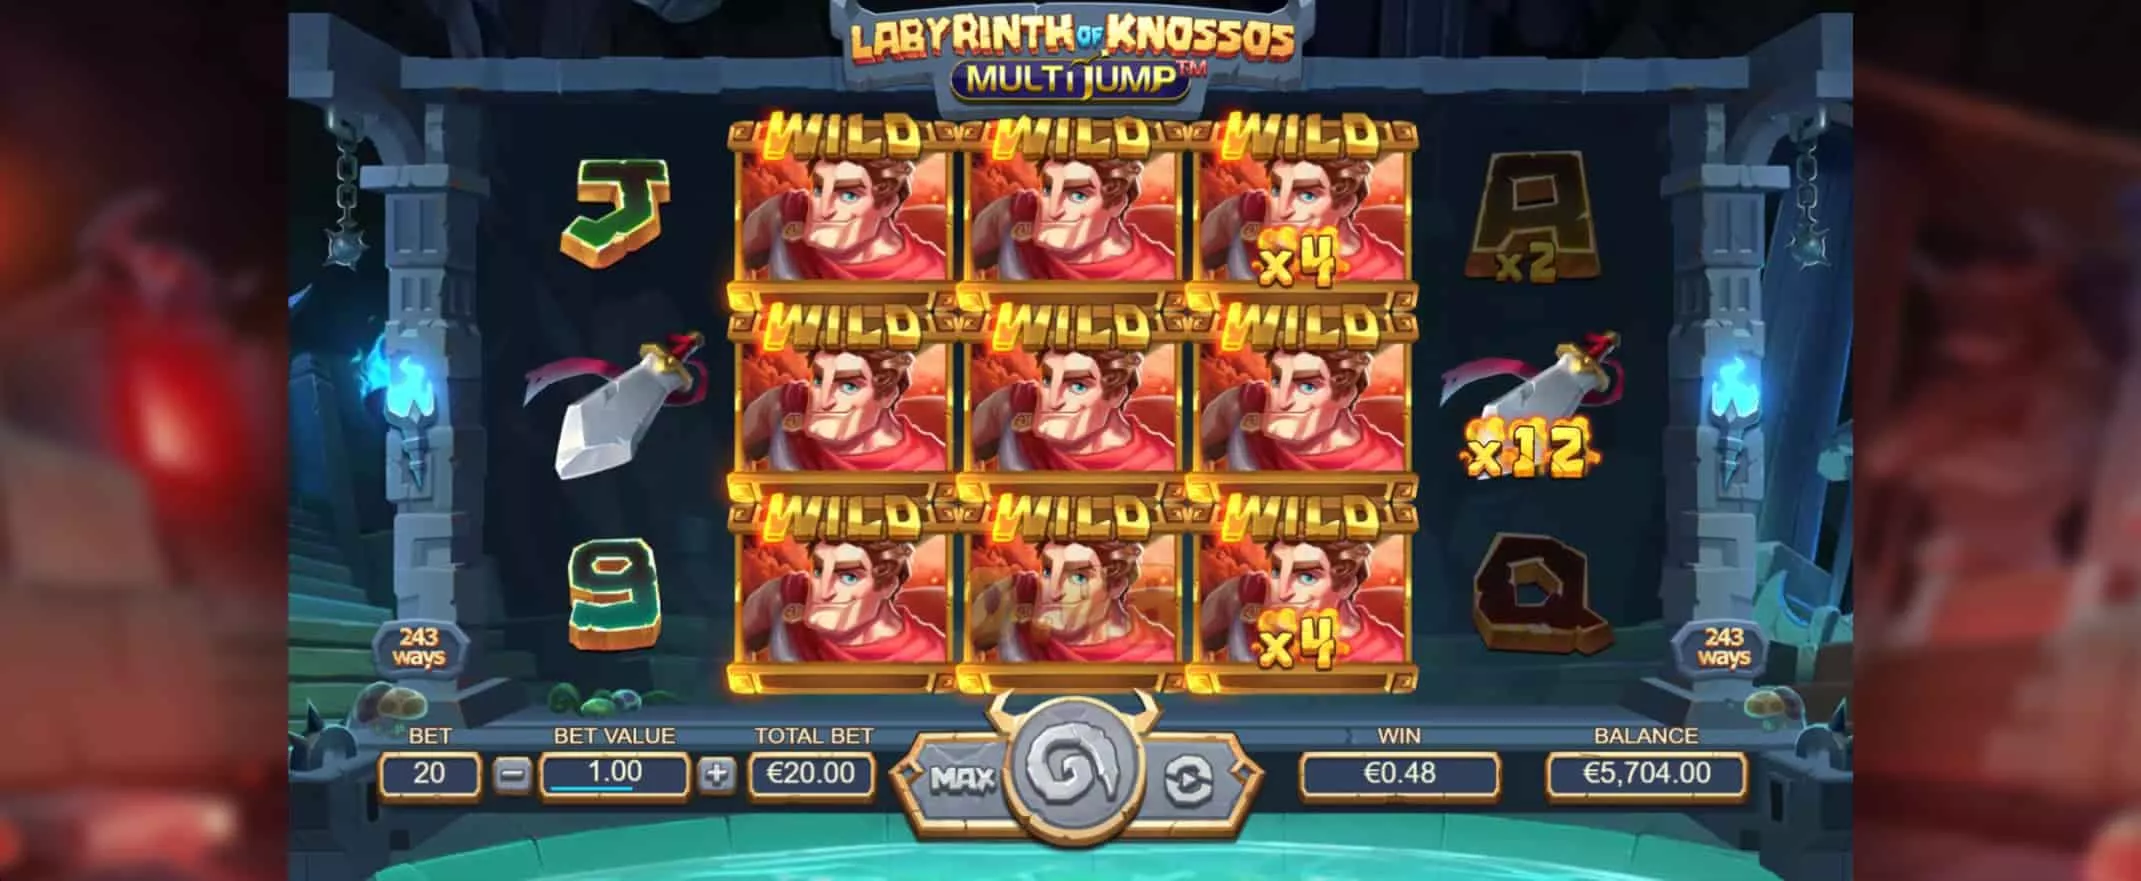 Labyrinth of Knossos MultiJump videoslot screenshot